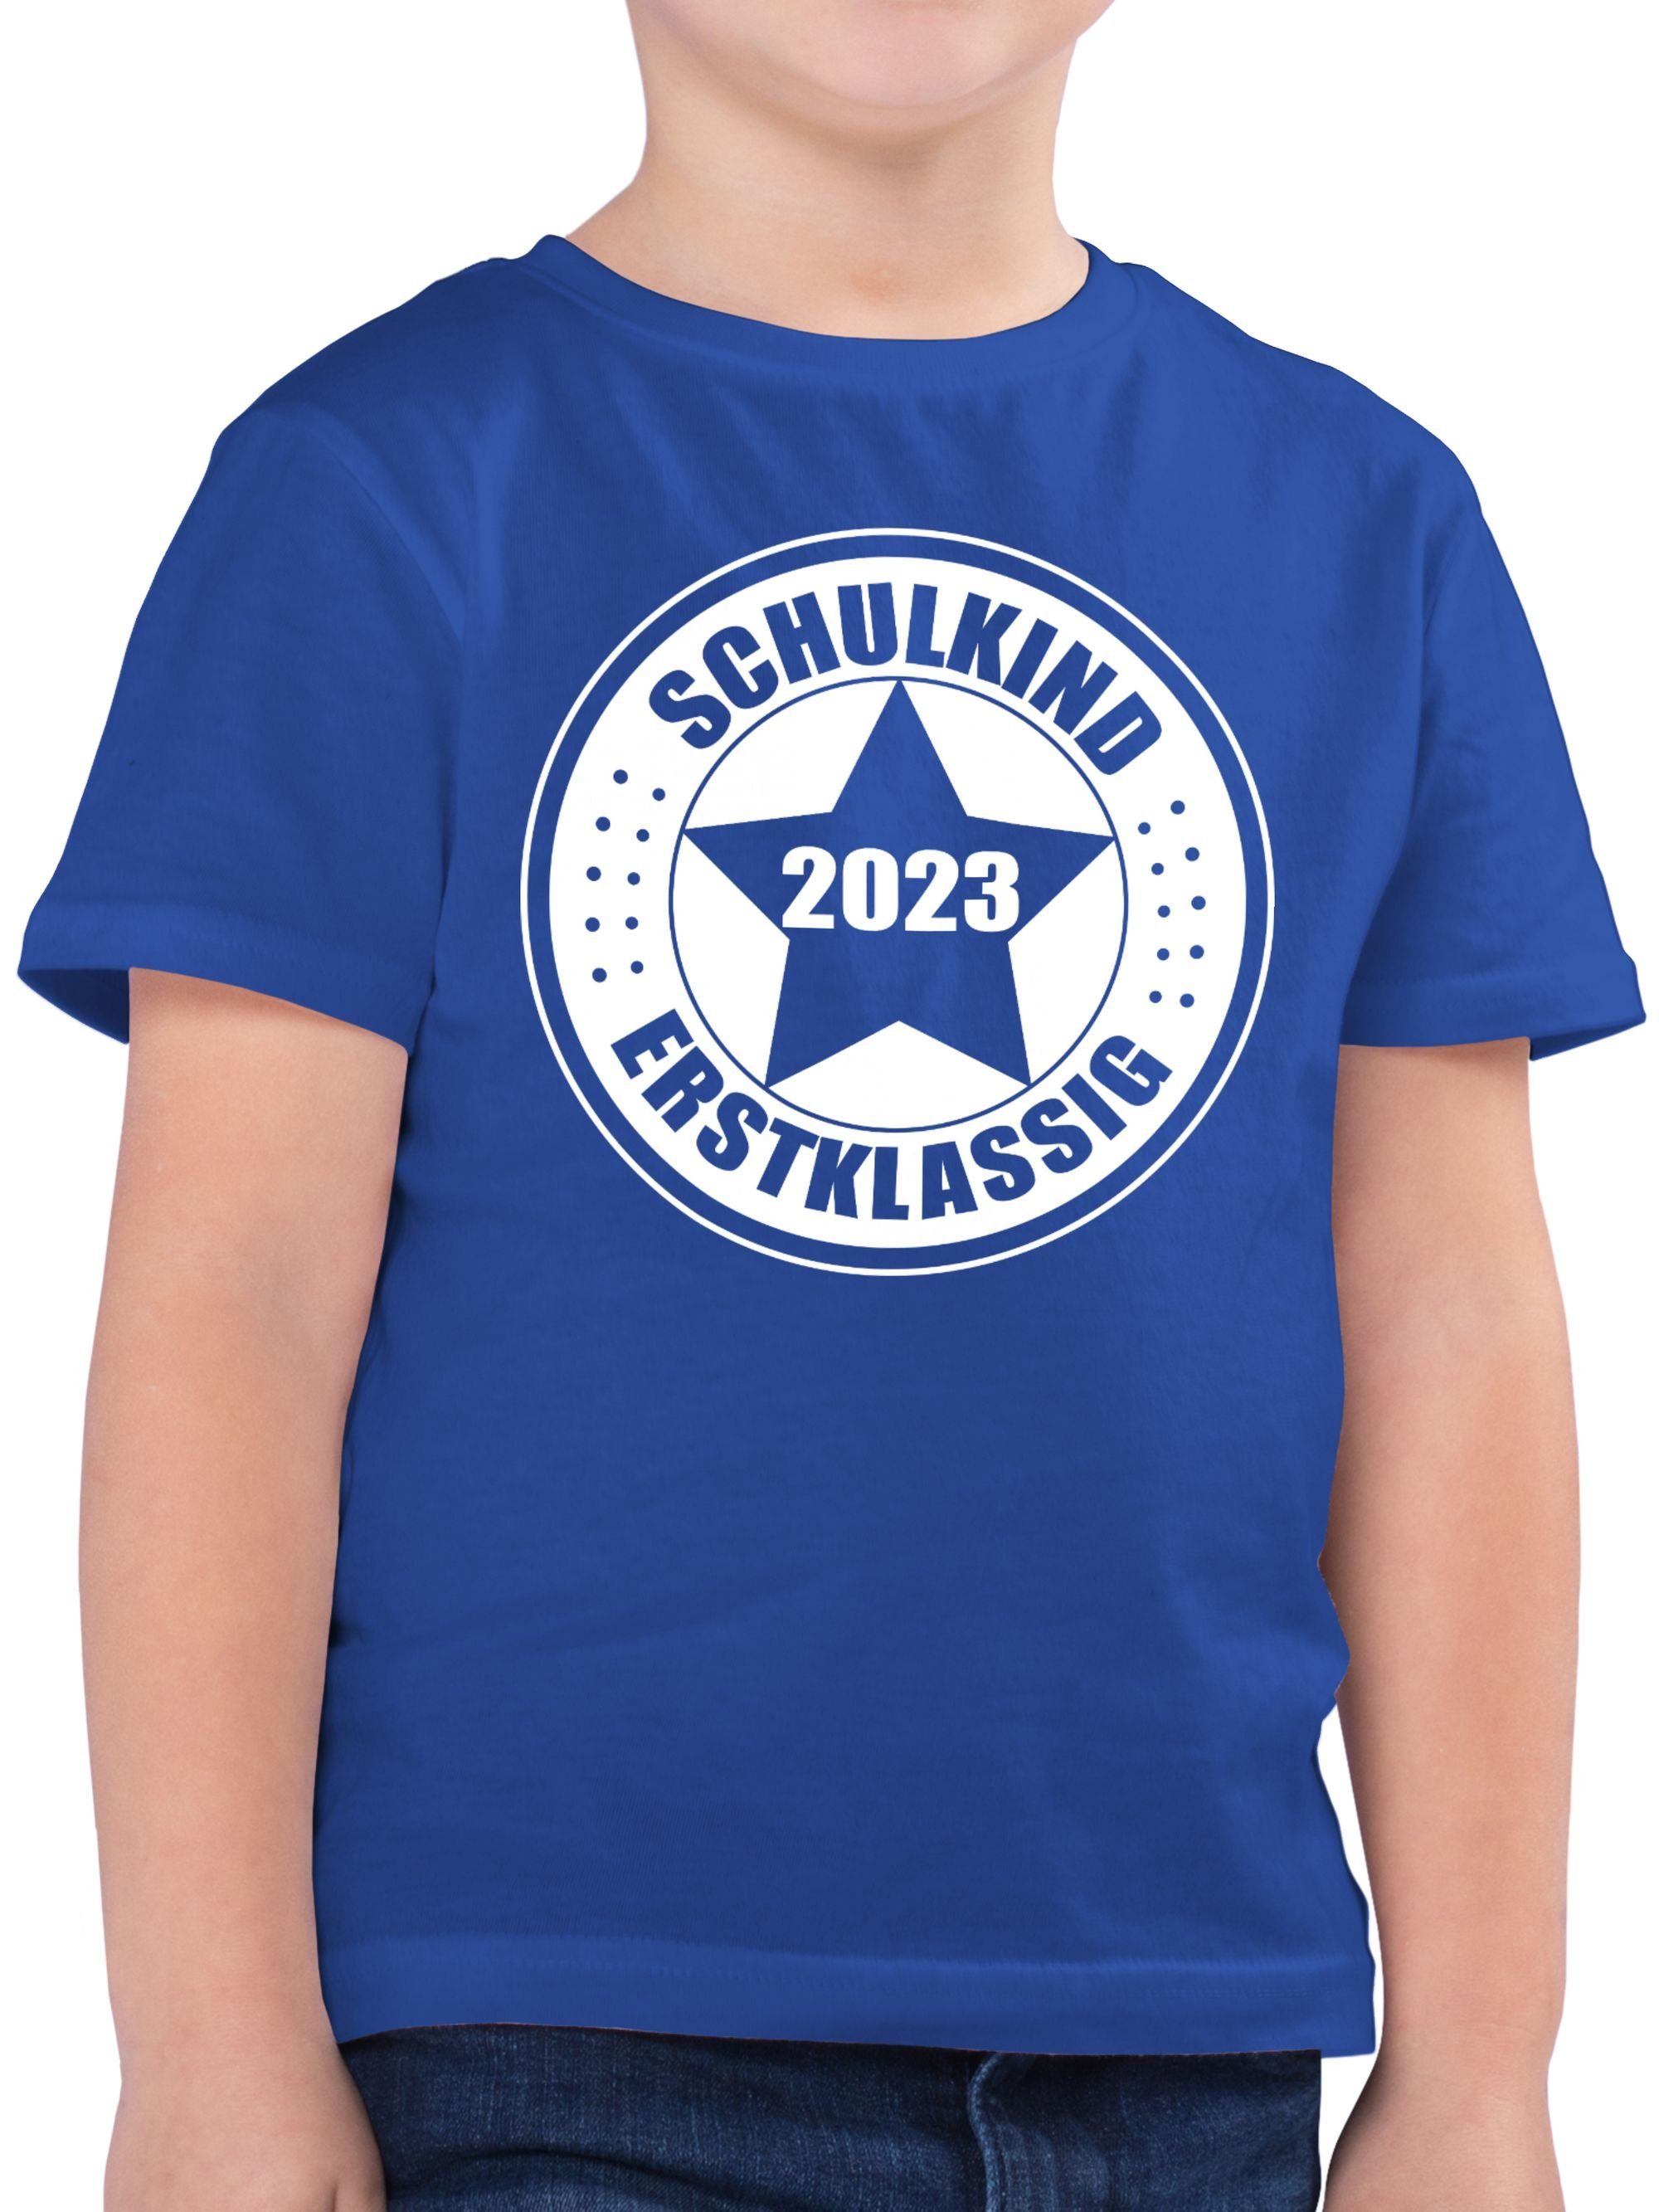 2023 Einschulung 03 T-Shirt Royalblau Schulanfang Geschenke Shirtracer Erstklassig - Schulkind Junge